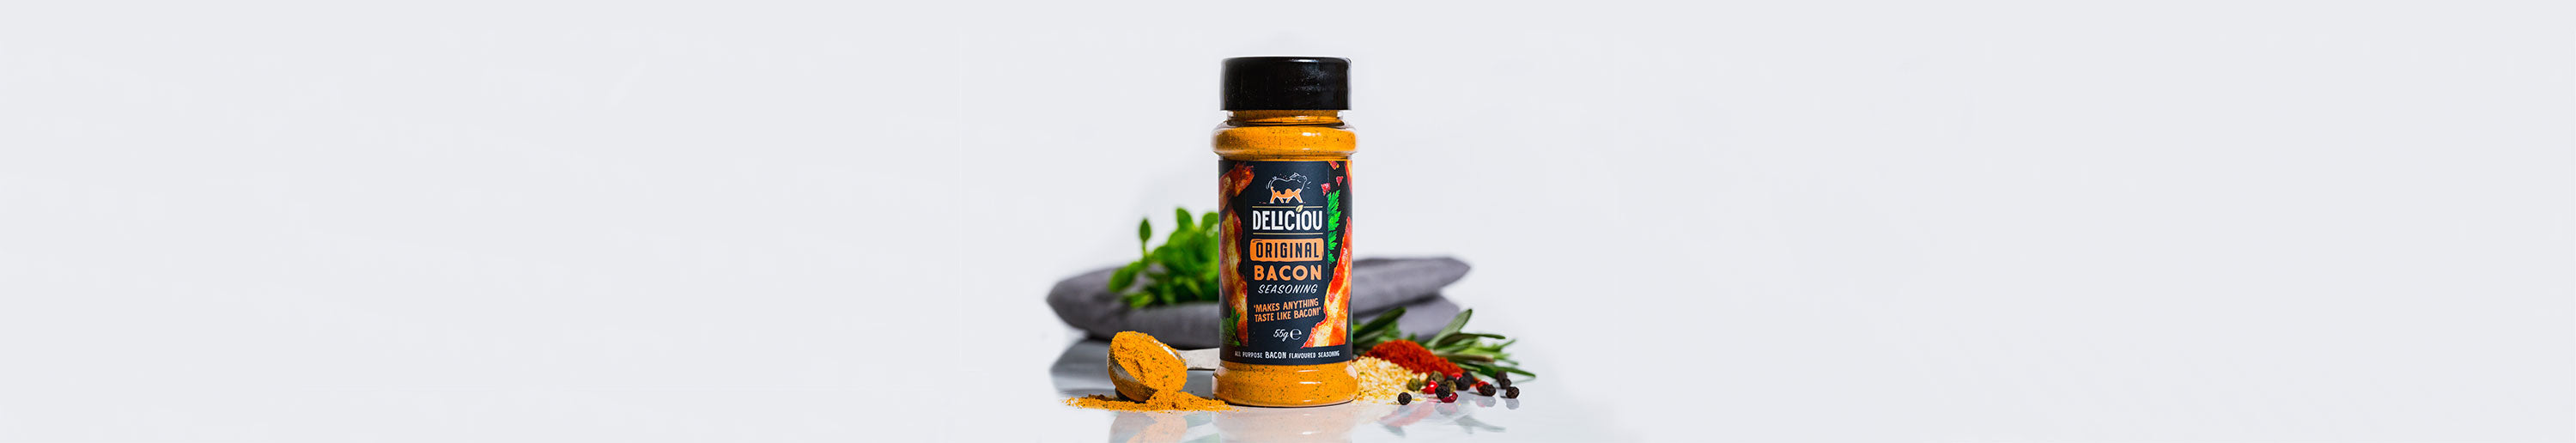 Deliciou Cheesy Bacon Seasoning Reviews